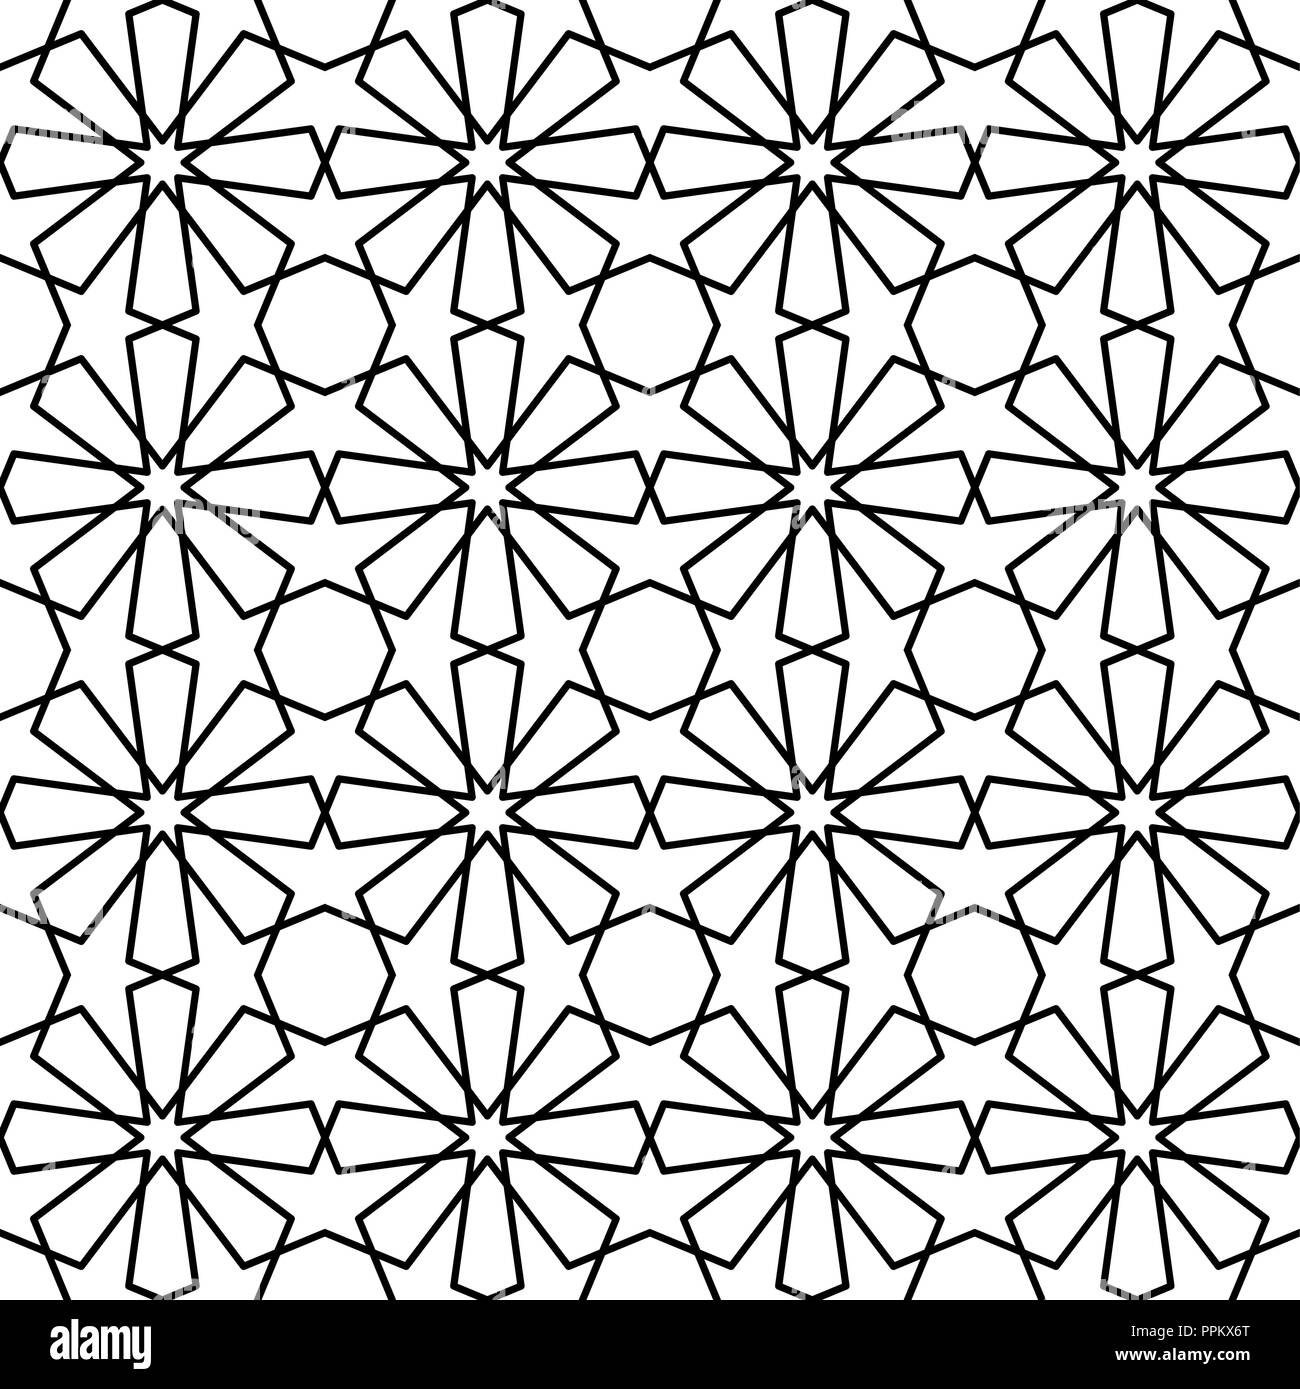 Islamic pattern vector illustration on white background Stock Vector